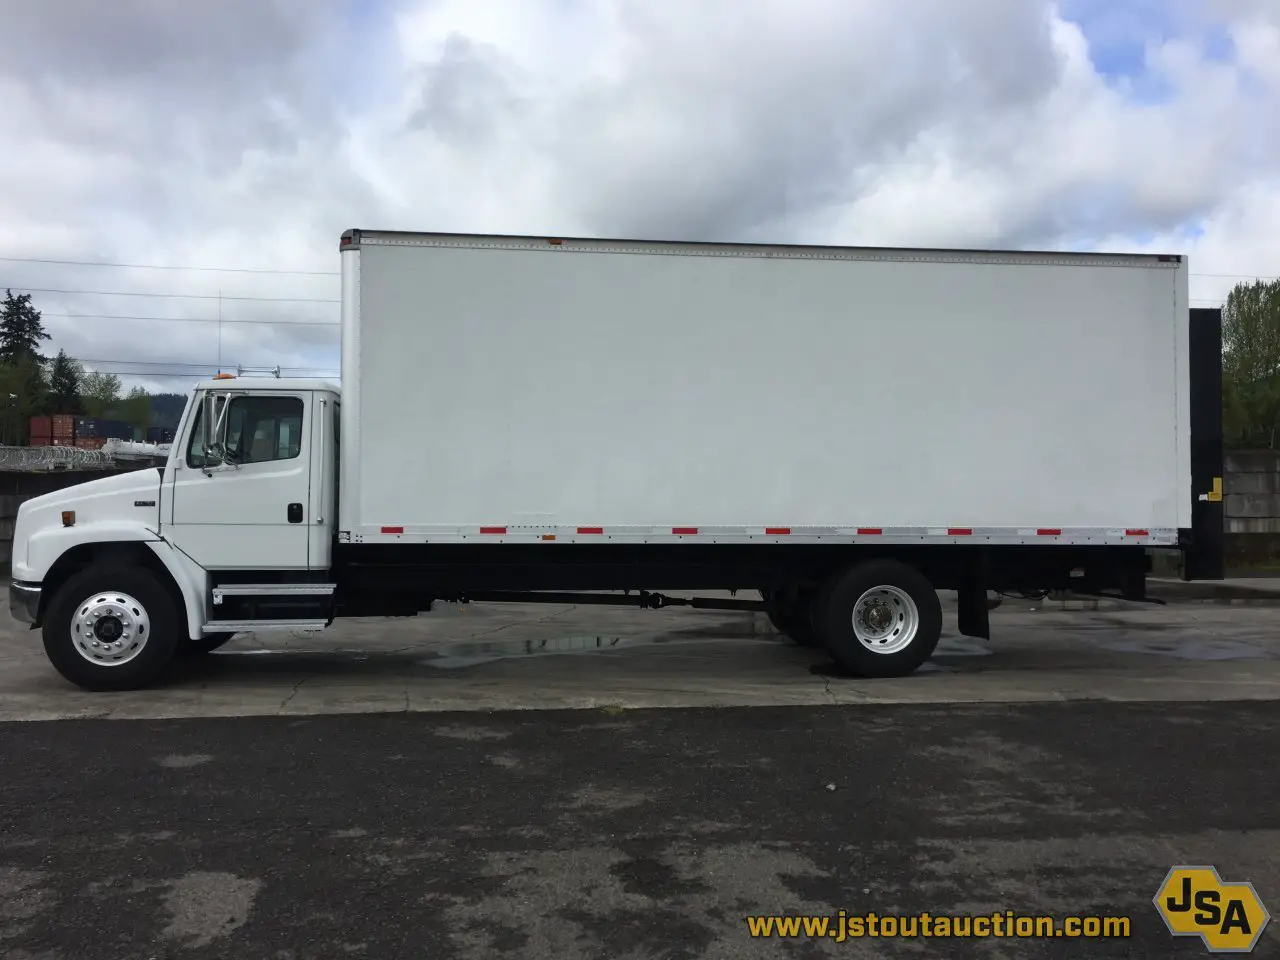 For Sale: 2000 Freightliner FL70 Box Truck